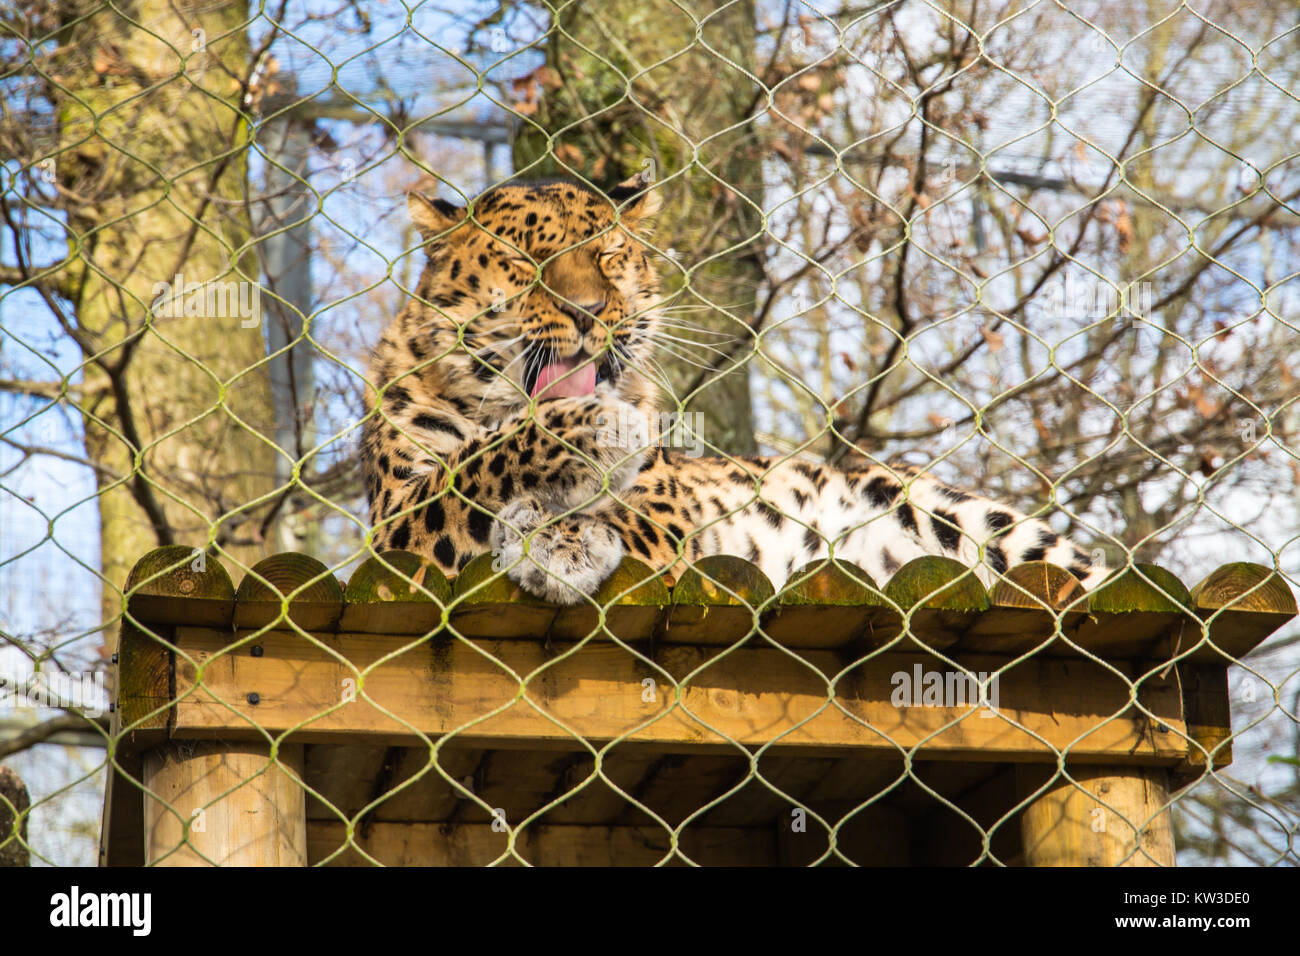 Amur leopard (Panthera pardus orientalis) at Marwell Zoo, UK Stock Photo